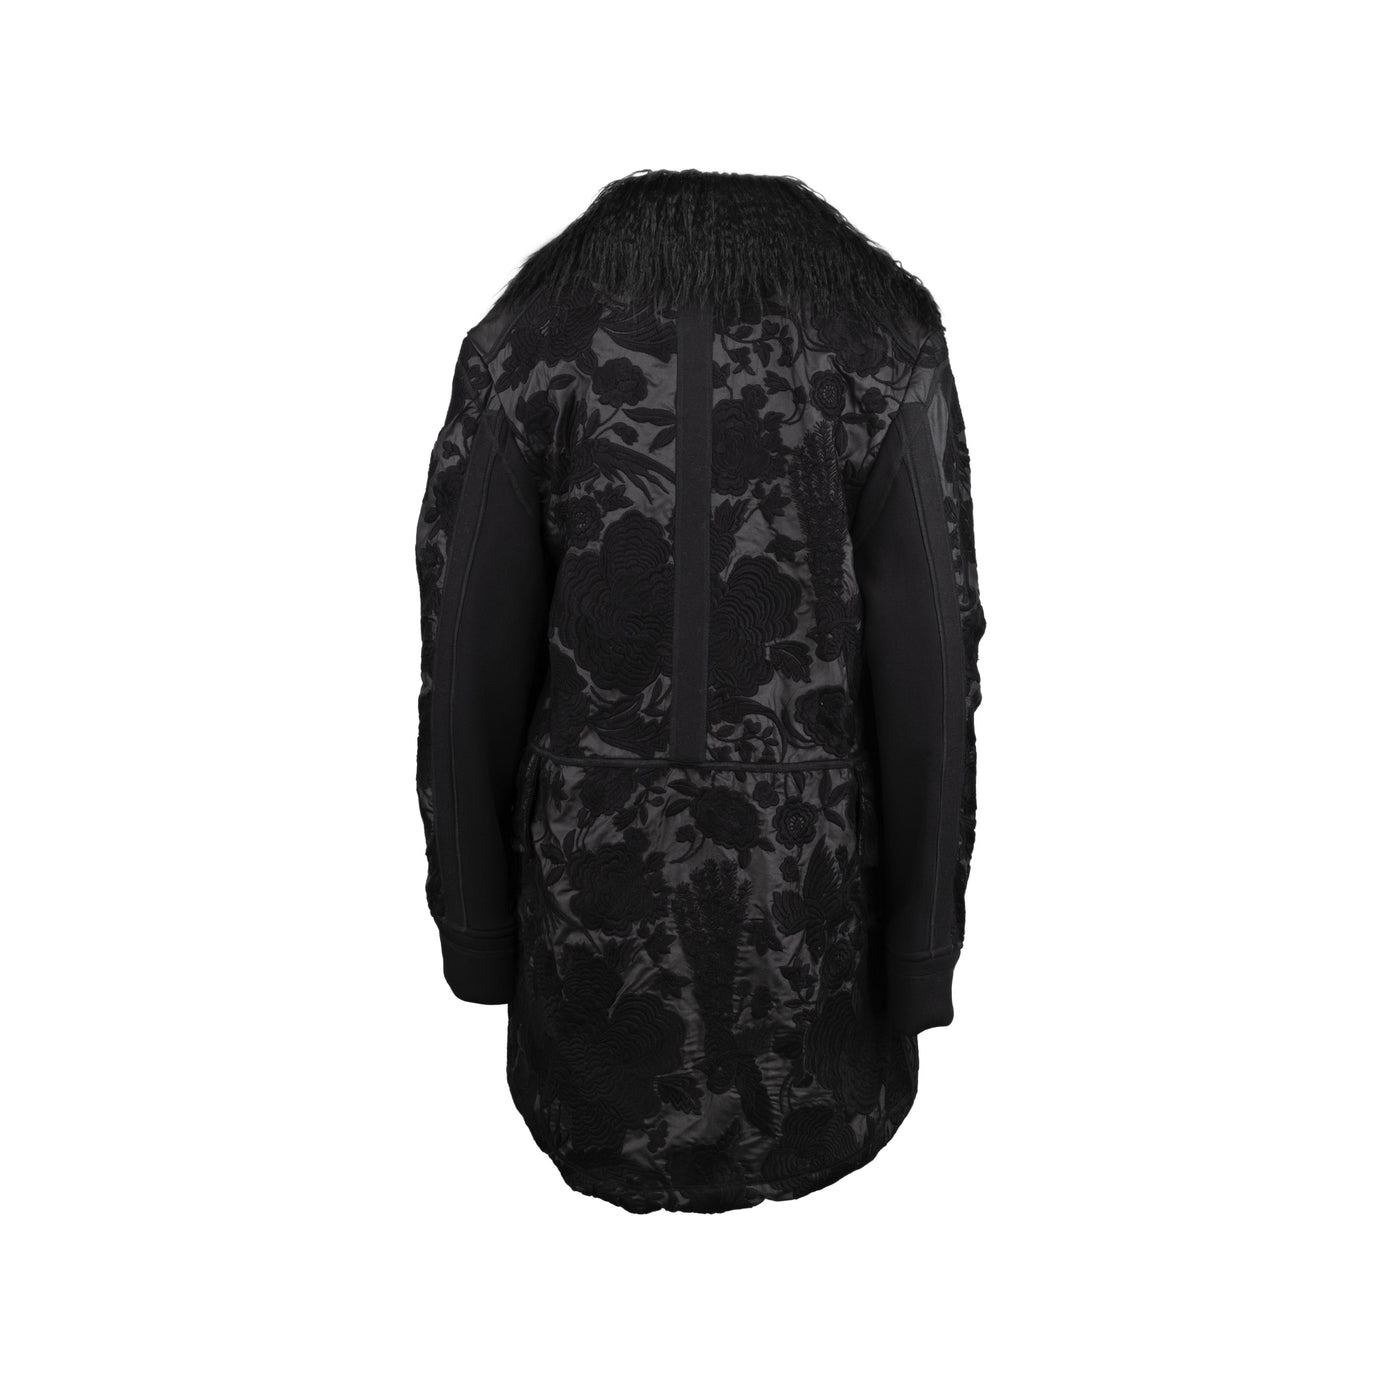 Diliborio black coat full coverage embroidery eco-fur inserts pre-owned